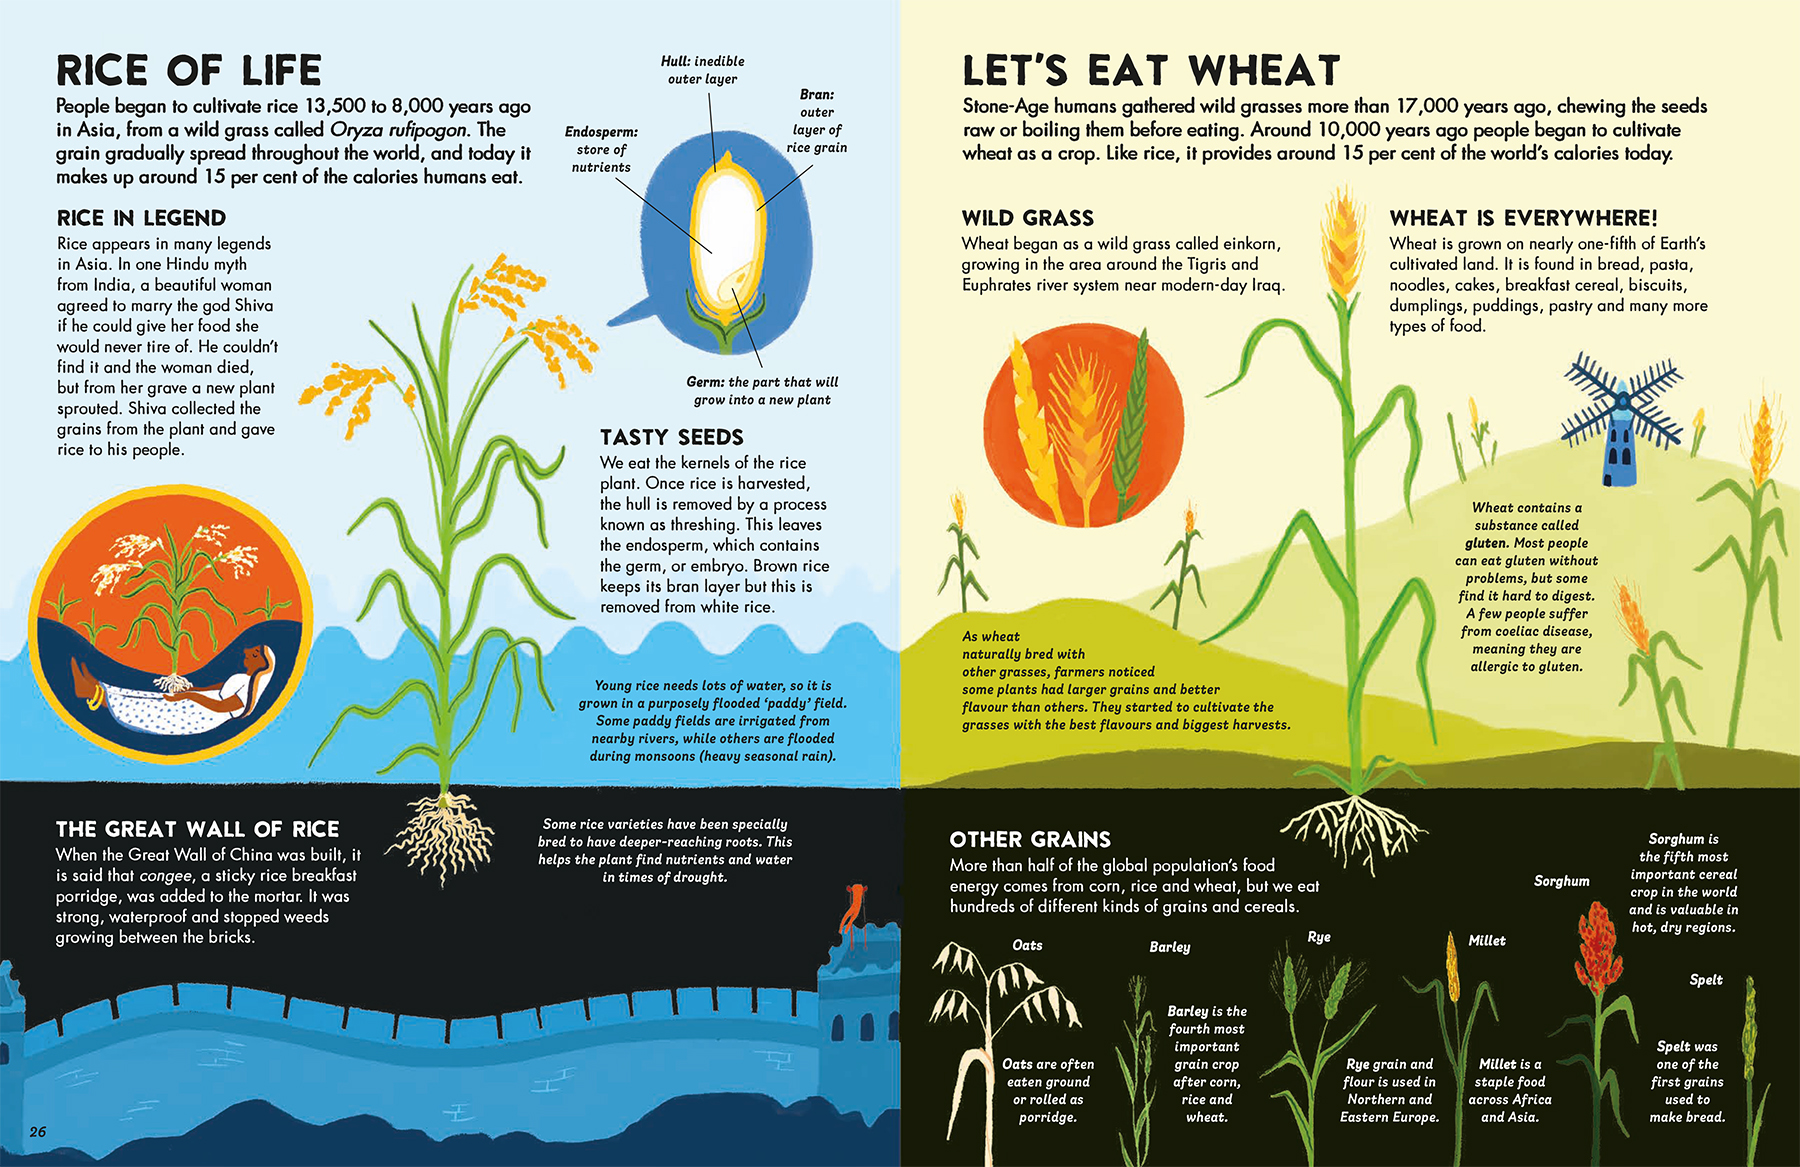 world-of-food-non-fiction-book-illustration-rice-wheat-seeds-oats-barley-rye-millet-sorghum-spelt-gluten-congee-violeta-noy-2